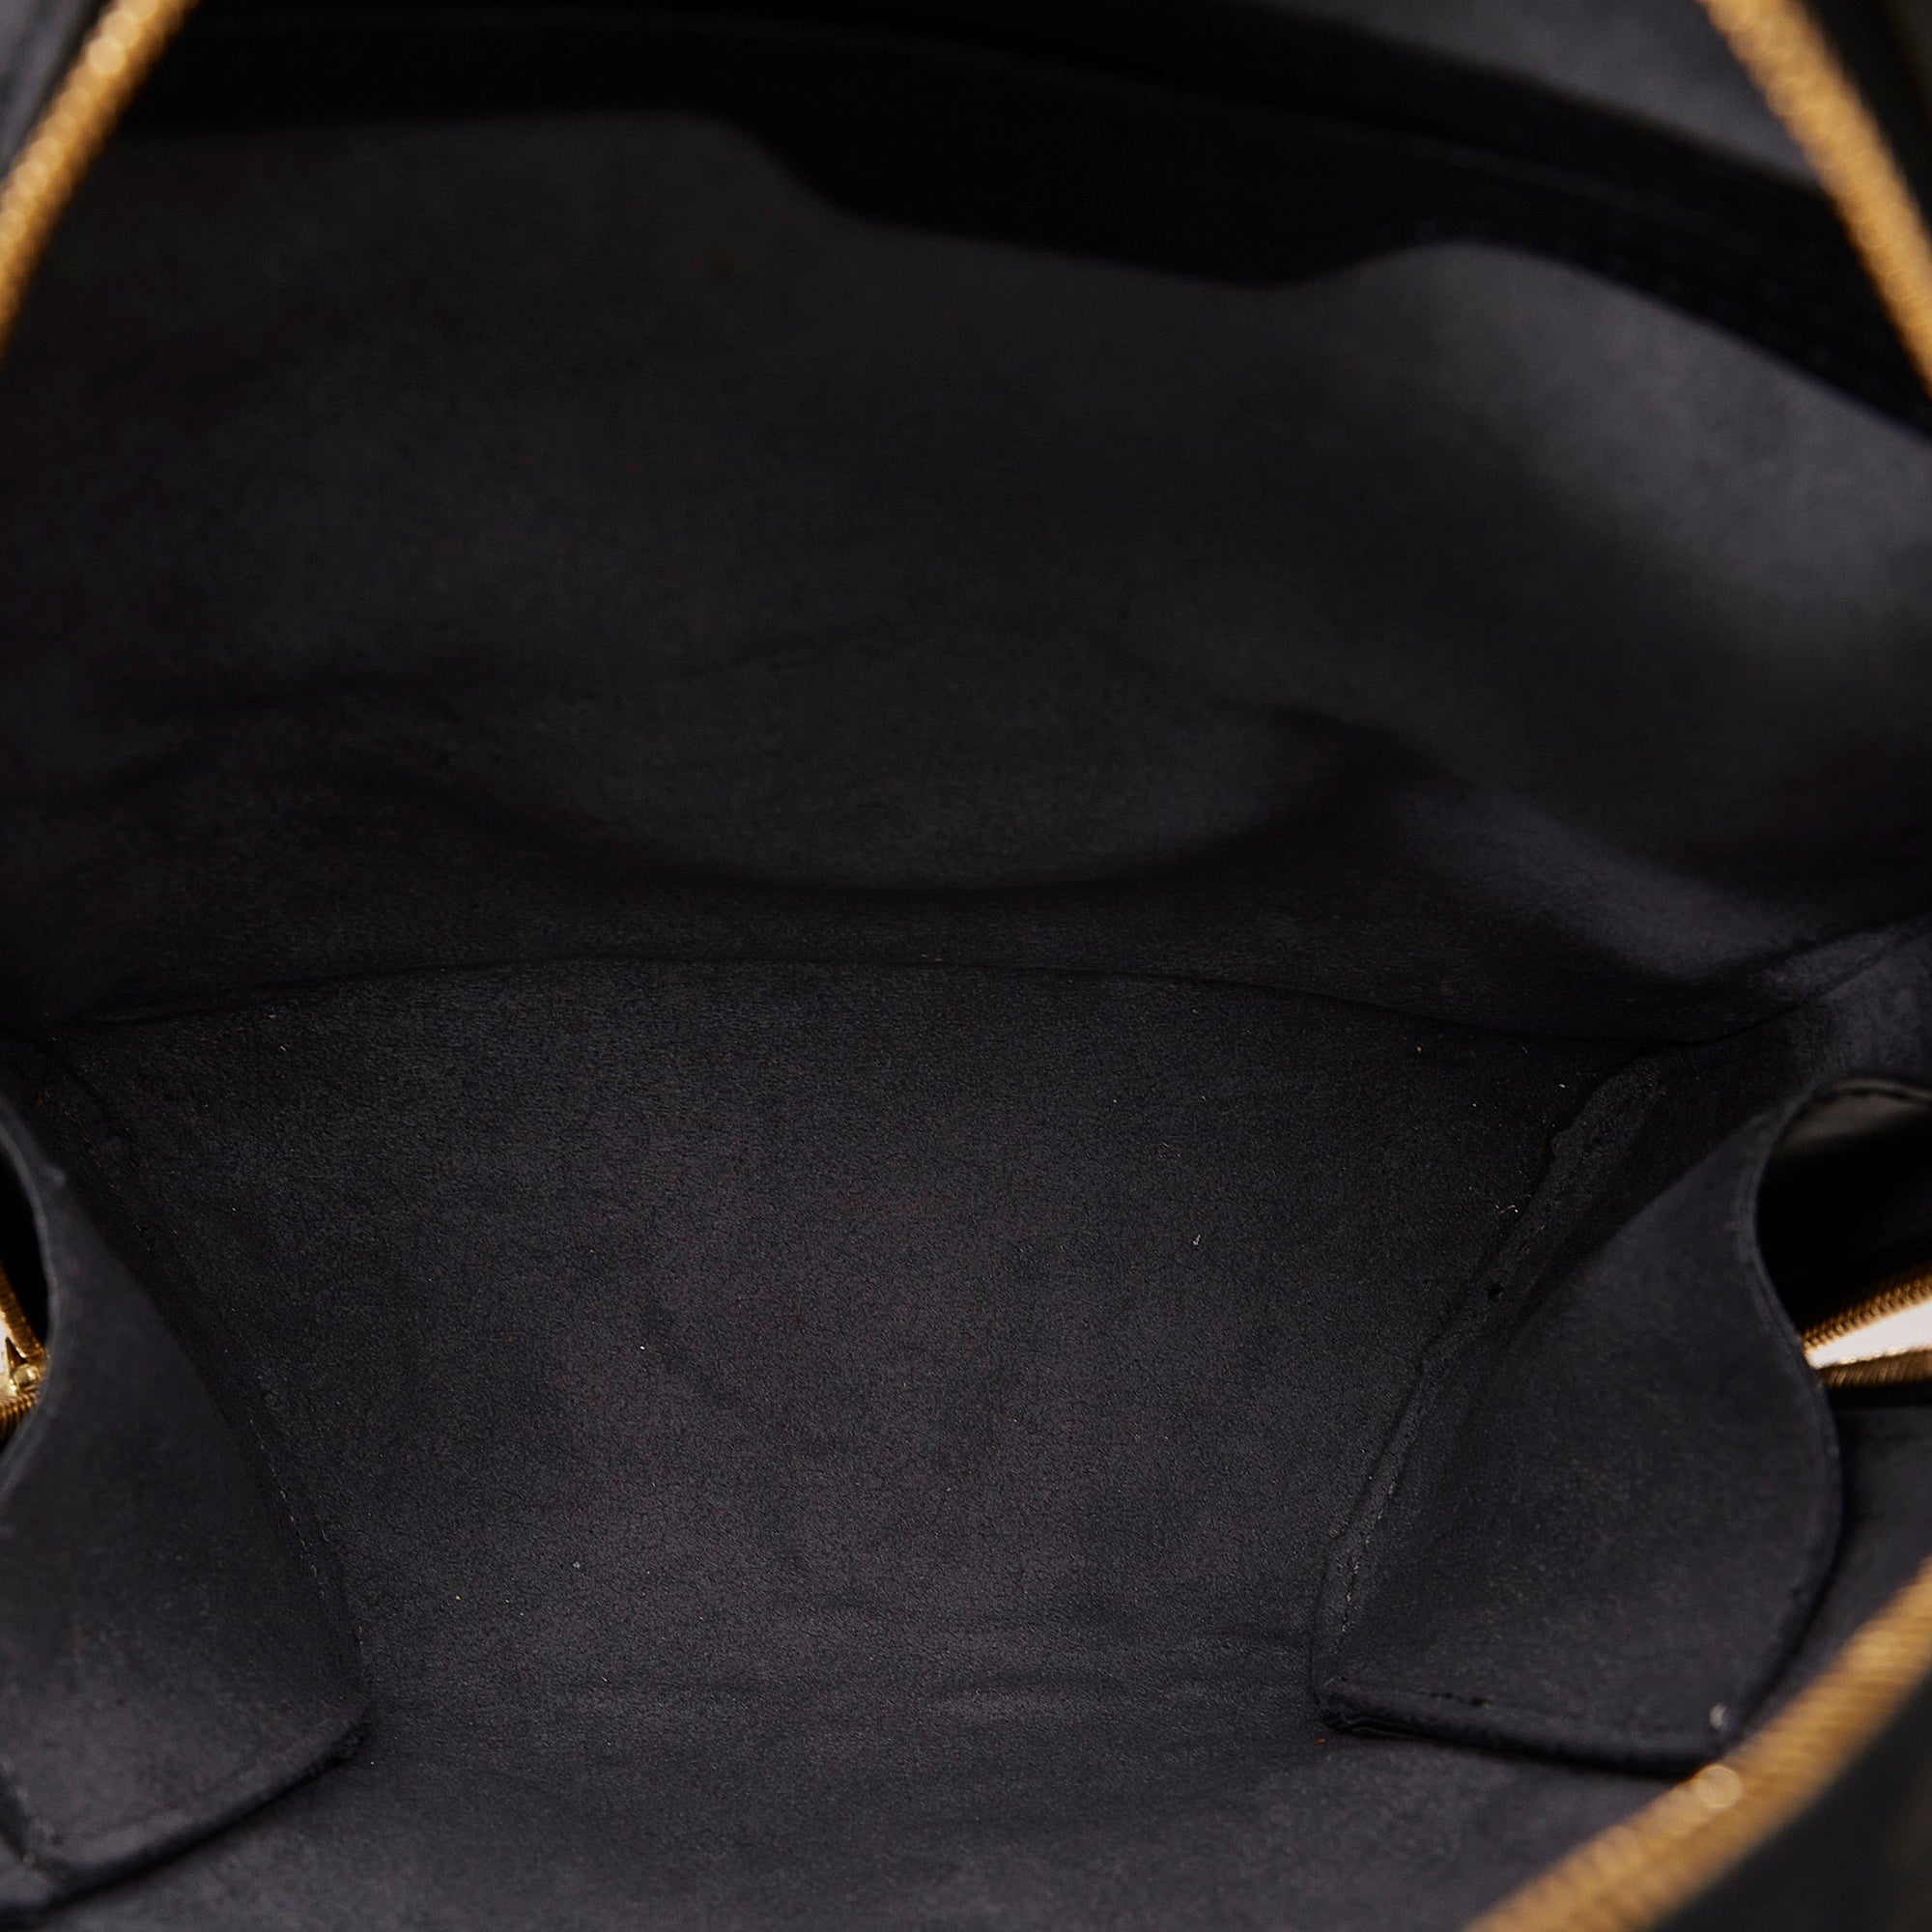 Black Louis Vuitton Epi Sac Montaigne Handbag, AmaflightschoolShops  Revival